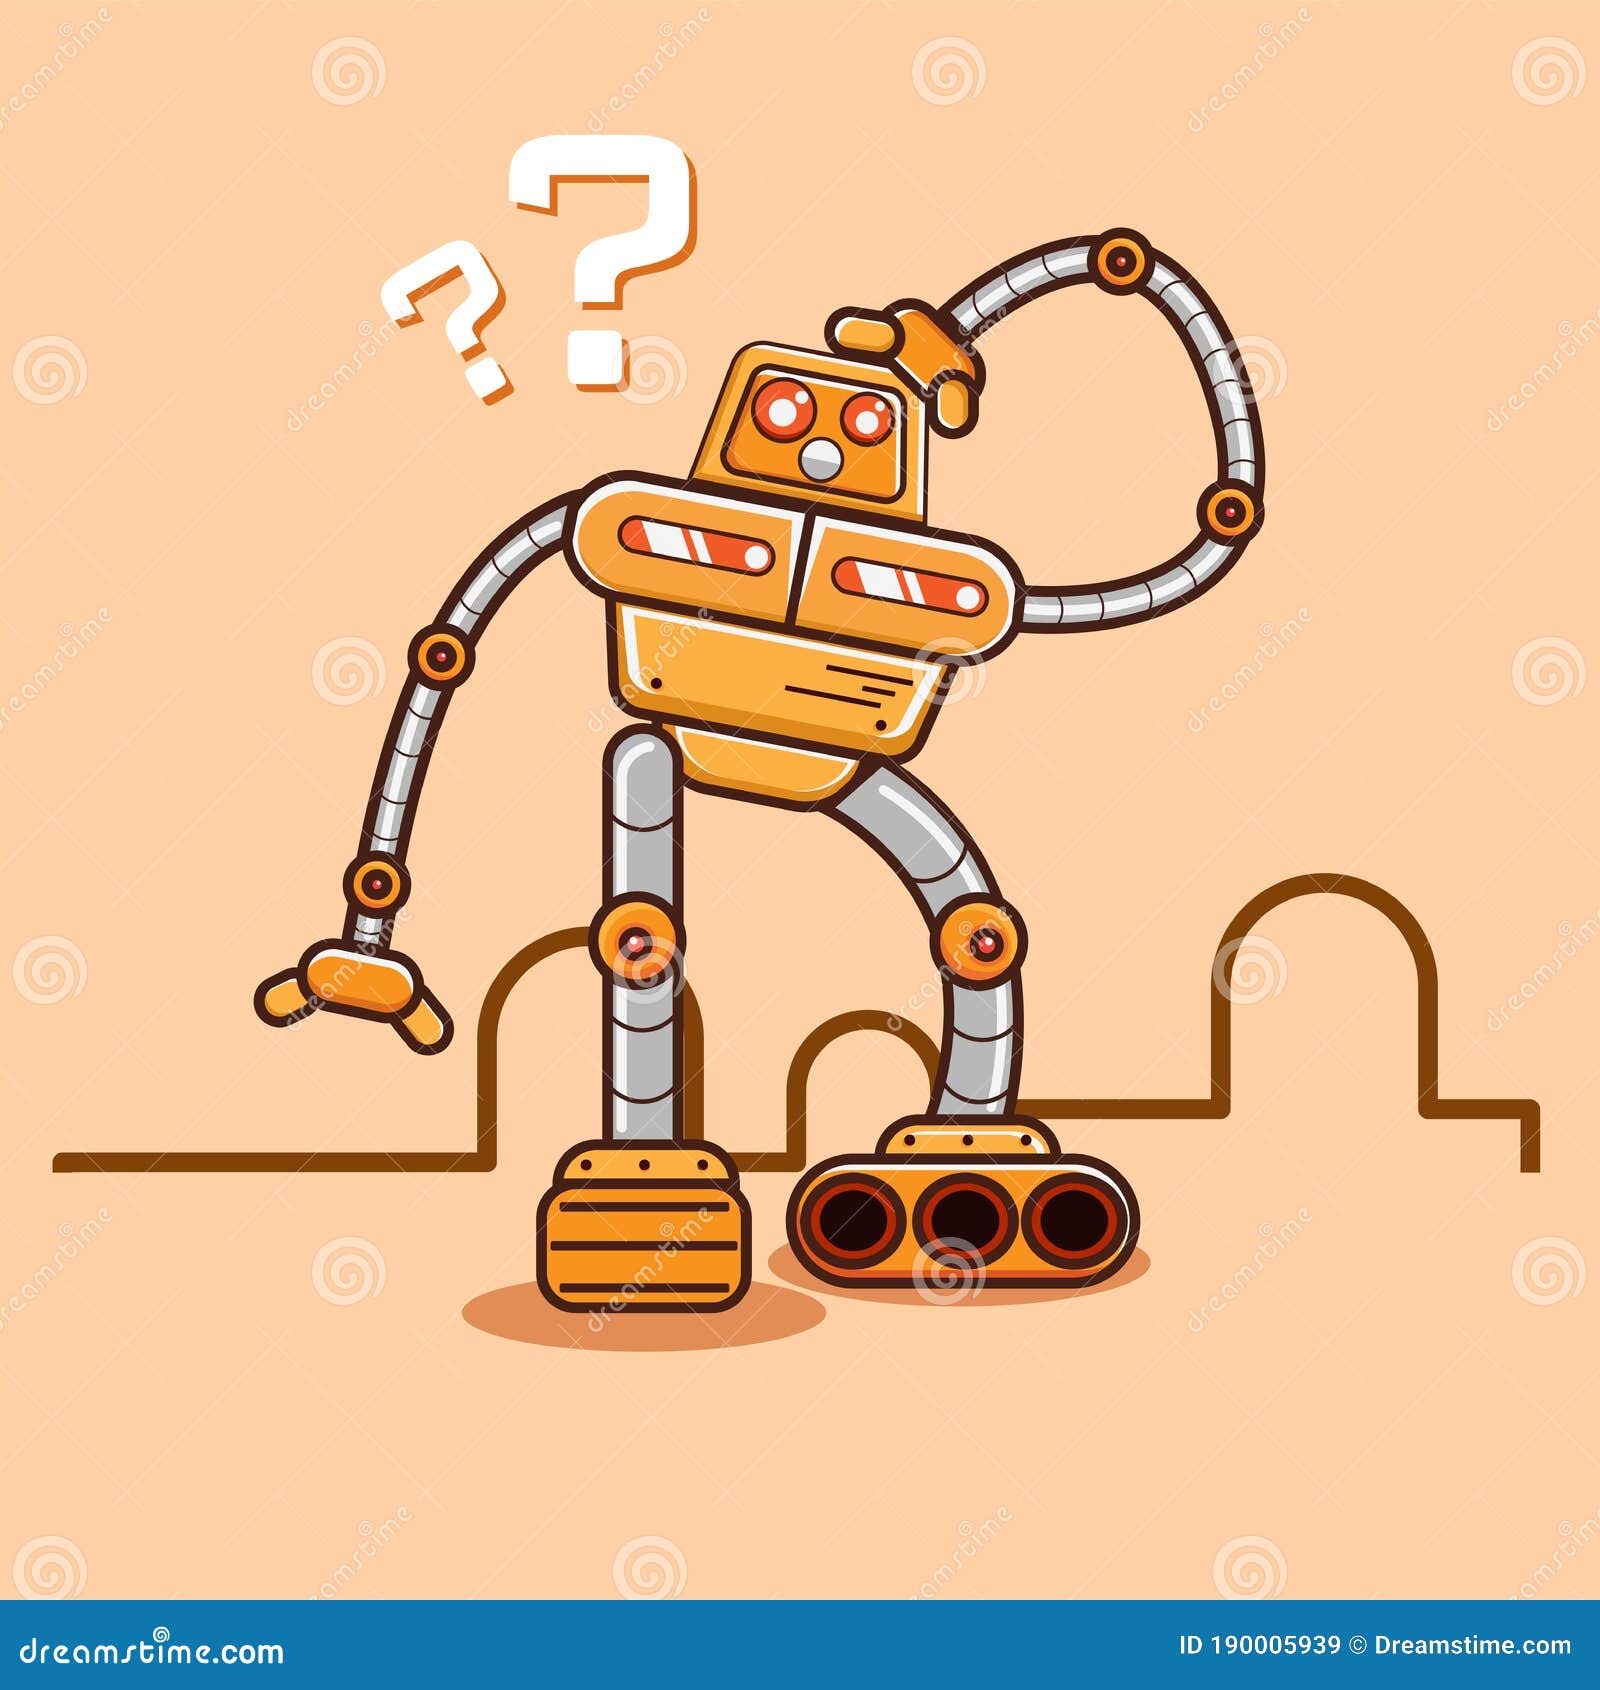 Robot Lindo Confundido Con Ilustración De Dibujos Animados Vectores De Mascota Signo De Interrogación Ilustración del - Ilustración de ayuda, futurista: 190005939